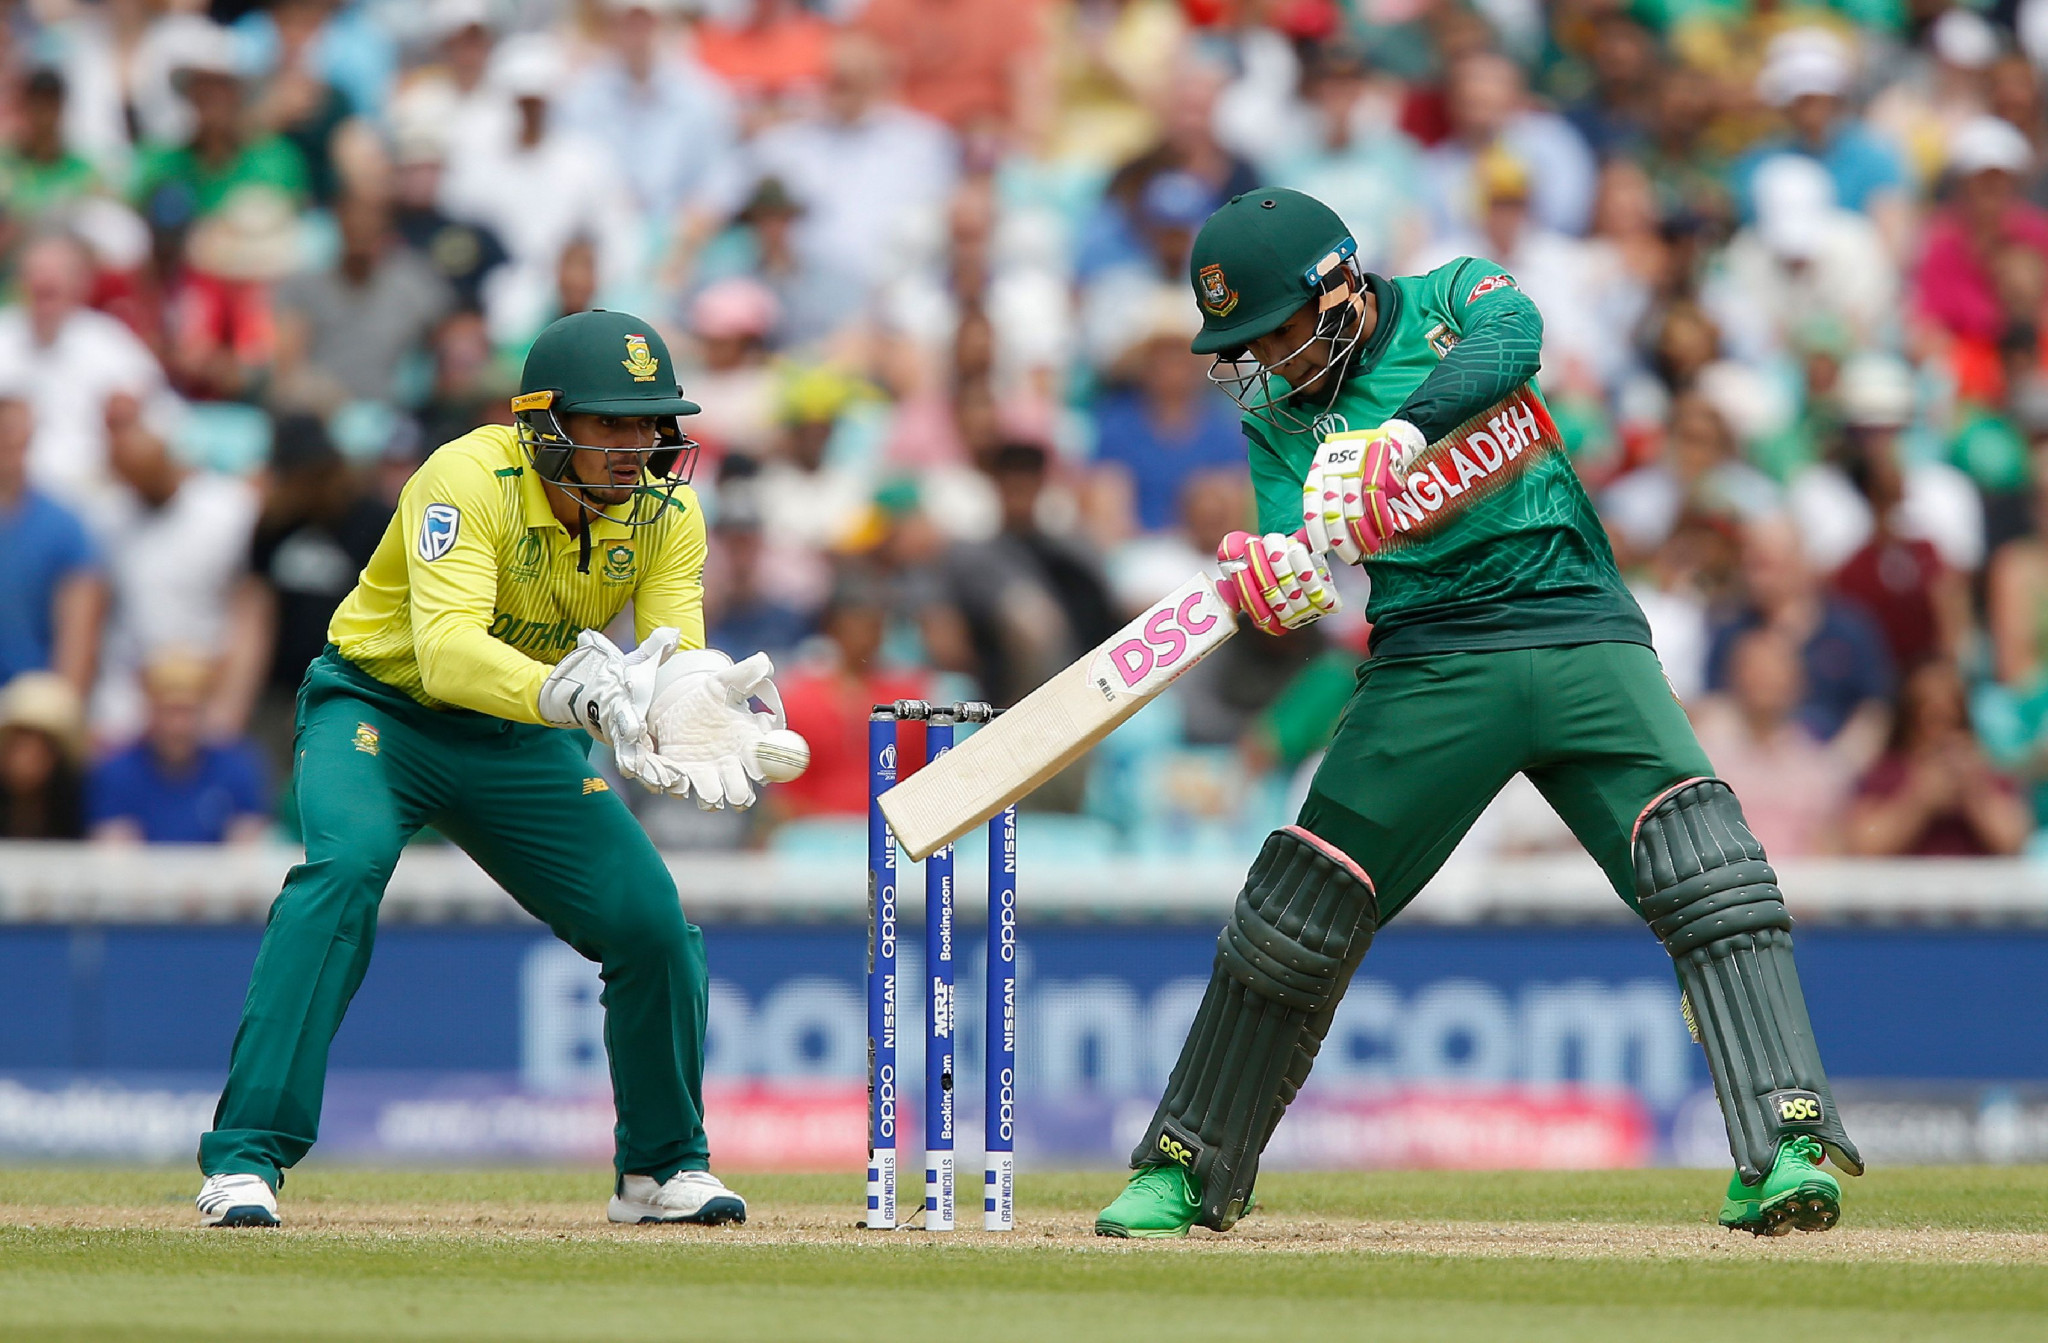 Mushfiqur Rahim top-scored for Bangladesh as he hit 78 runs ©Getty Images